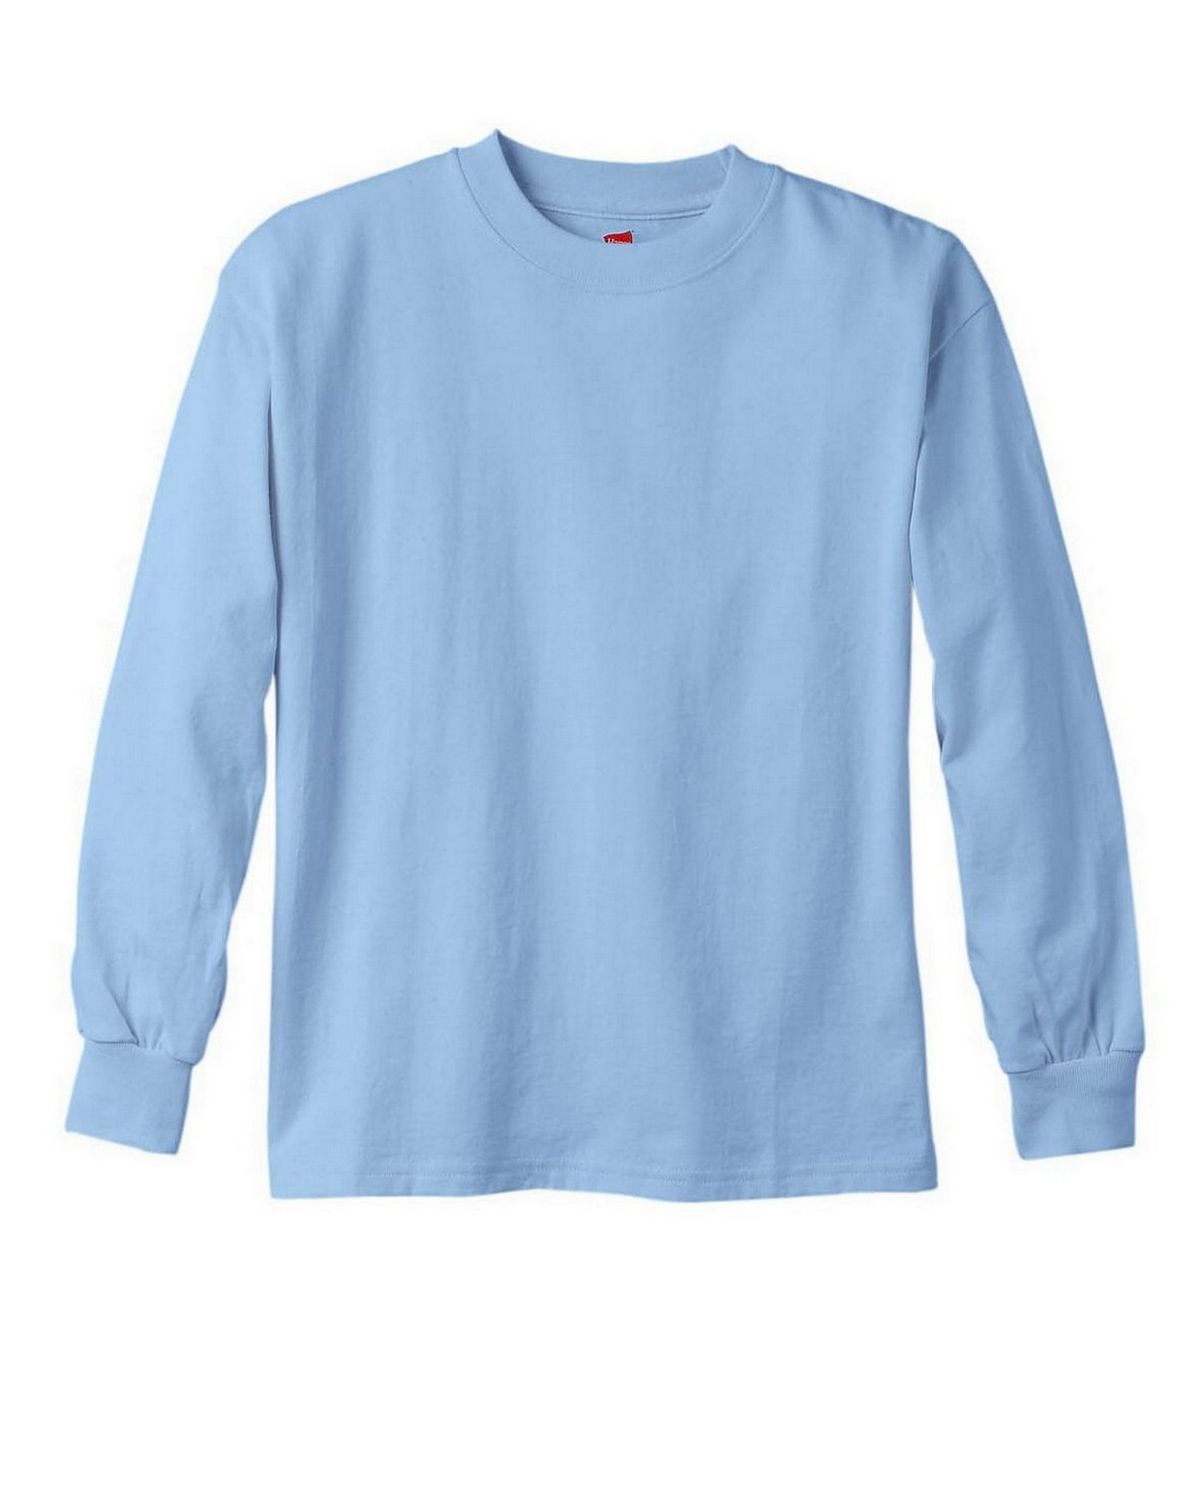 Hanes 5546 Youth Tagless Long Sleeve T Shirt - ApparelnBags.com